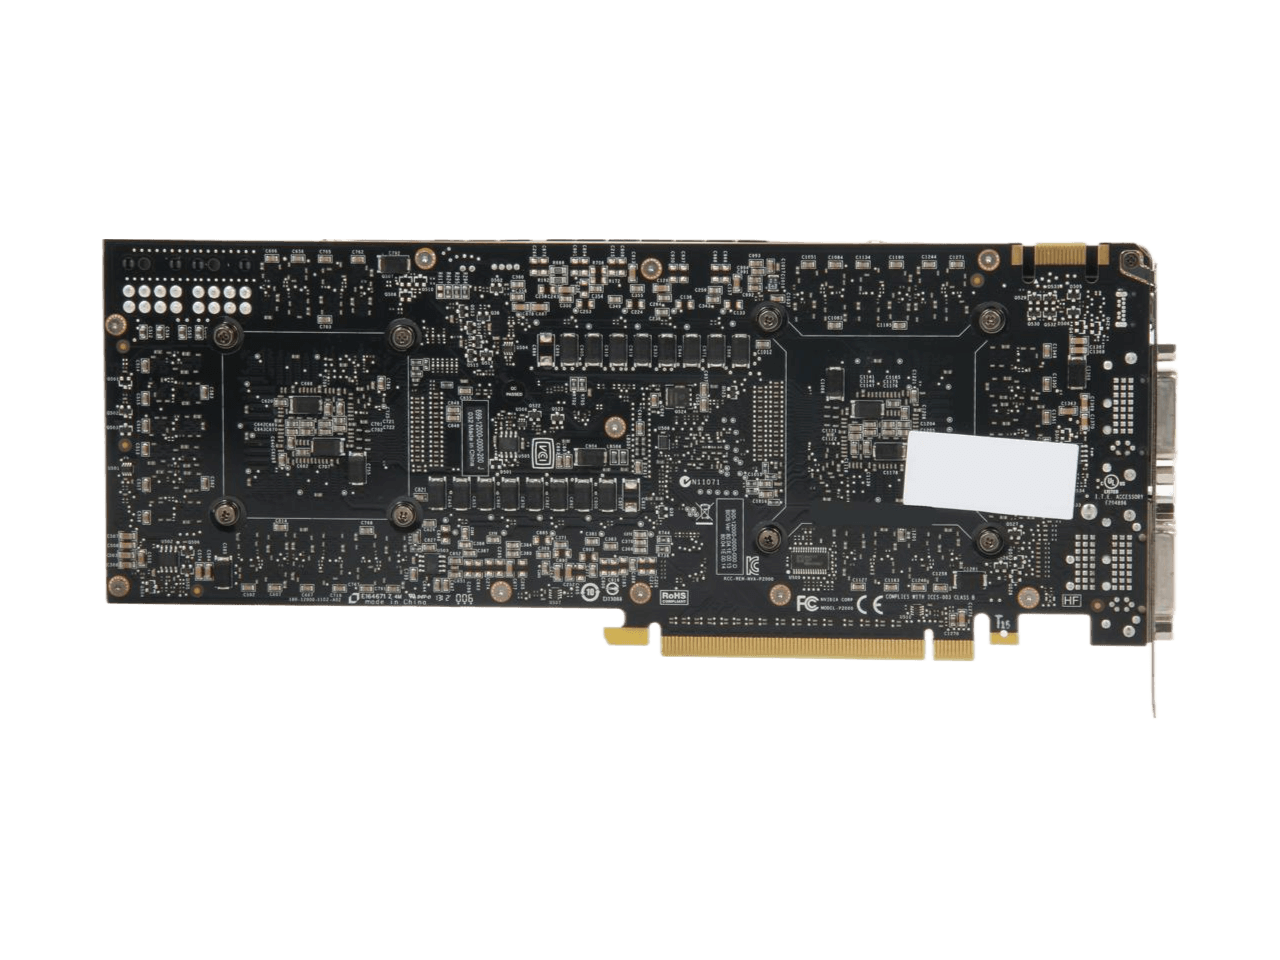 EVGA GeForce GTX 690 4GB 512-Bit GDDR5 DirectX 12 PCI Express 3.0 x16 HDCP Ready SLI Support Video Card 04G-P4-2690-KR